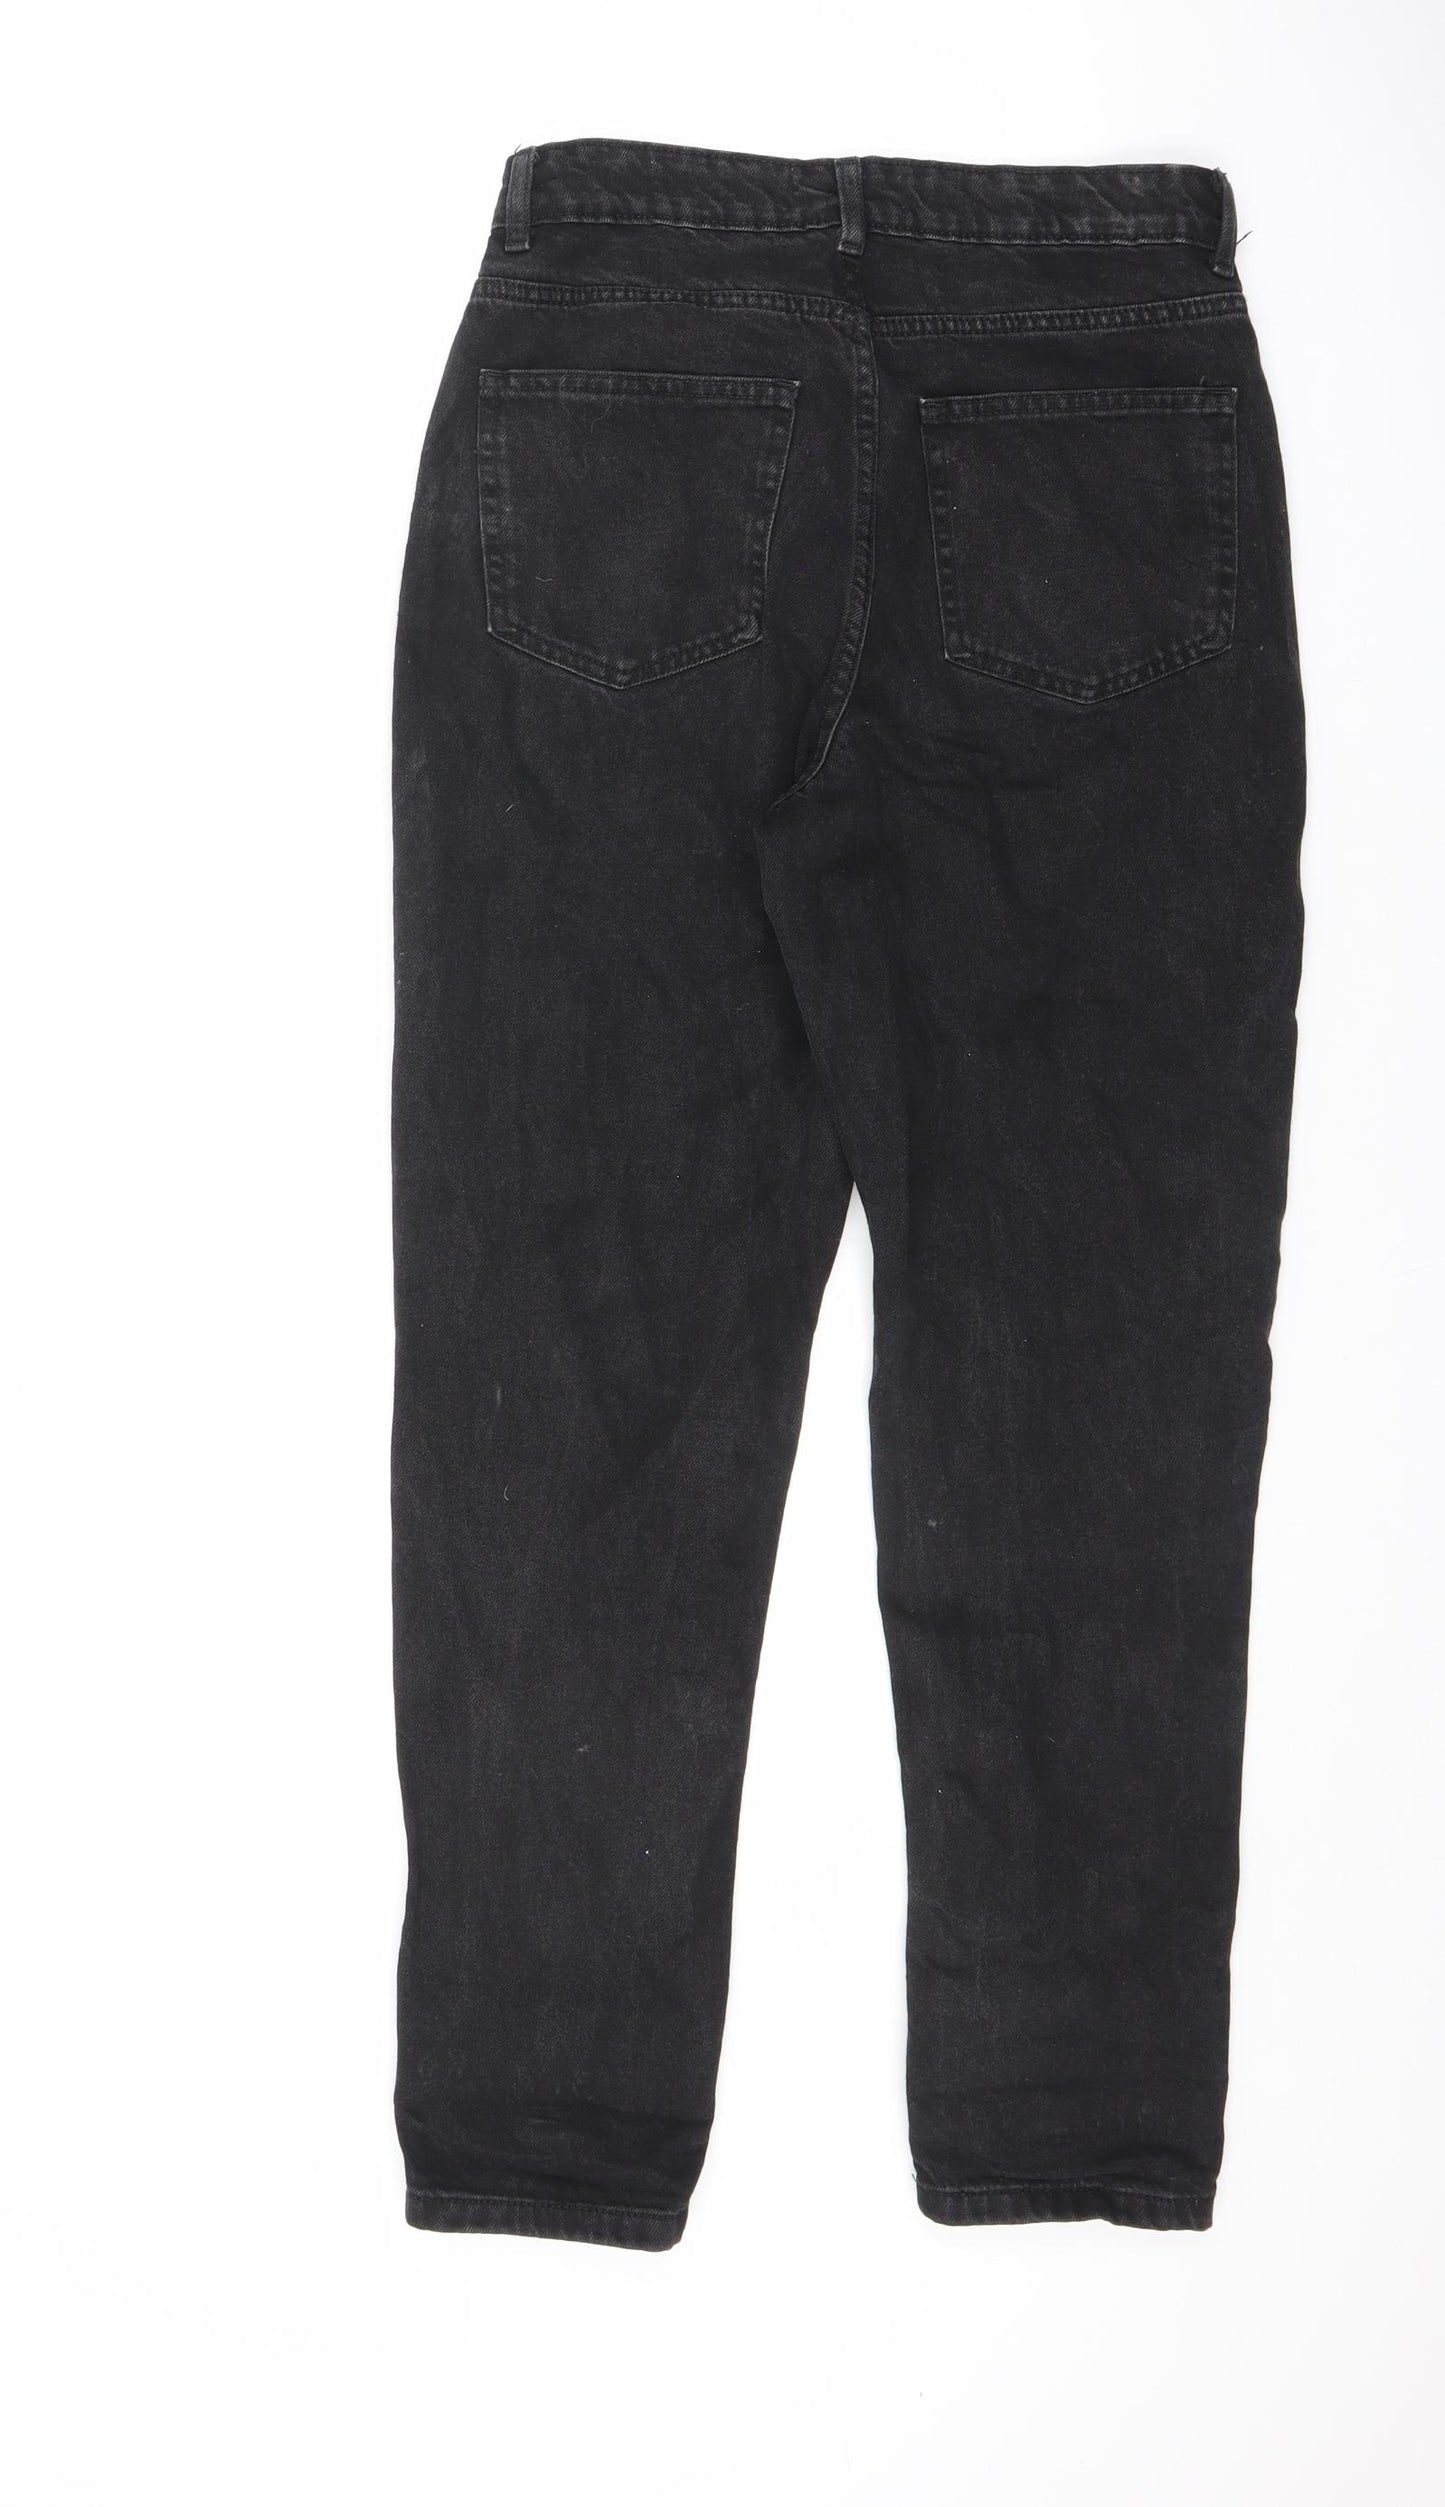 Denim & Co. Womens Black Cotton Skinny Jeans Size 8 L27 in Regular Zip